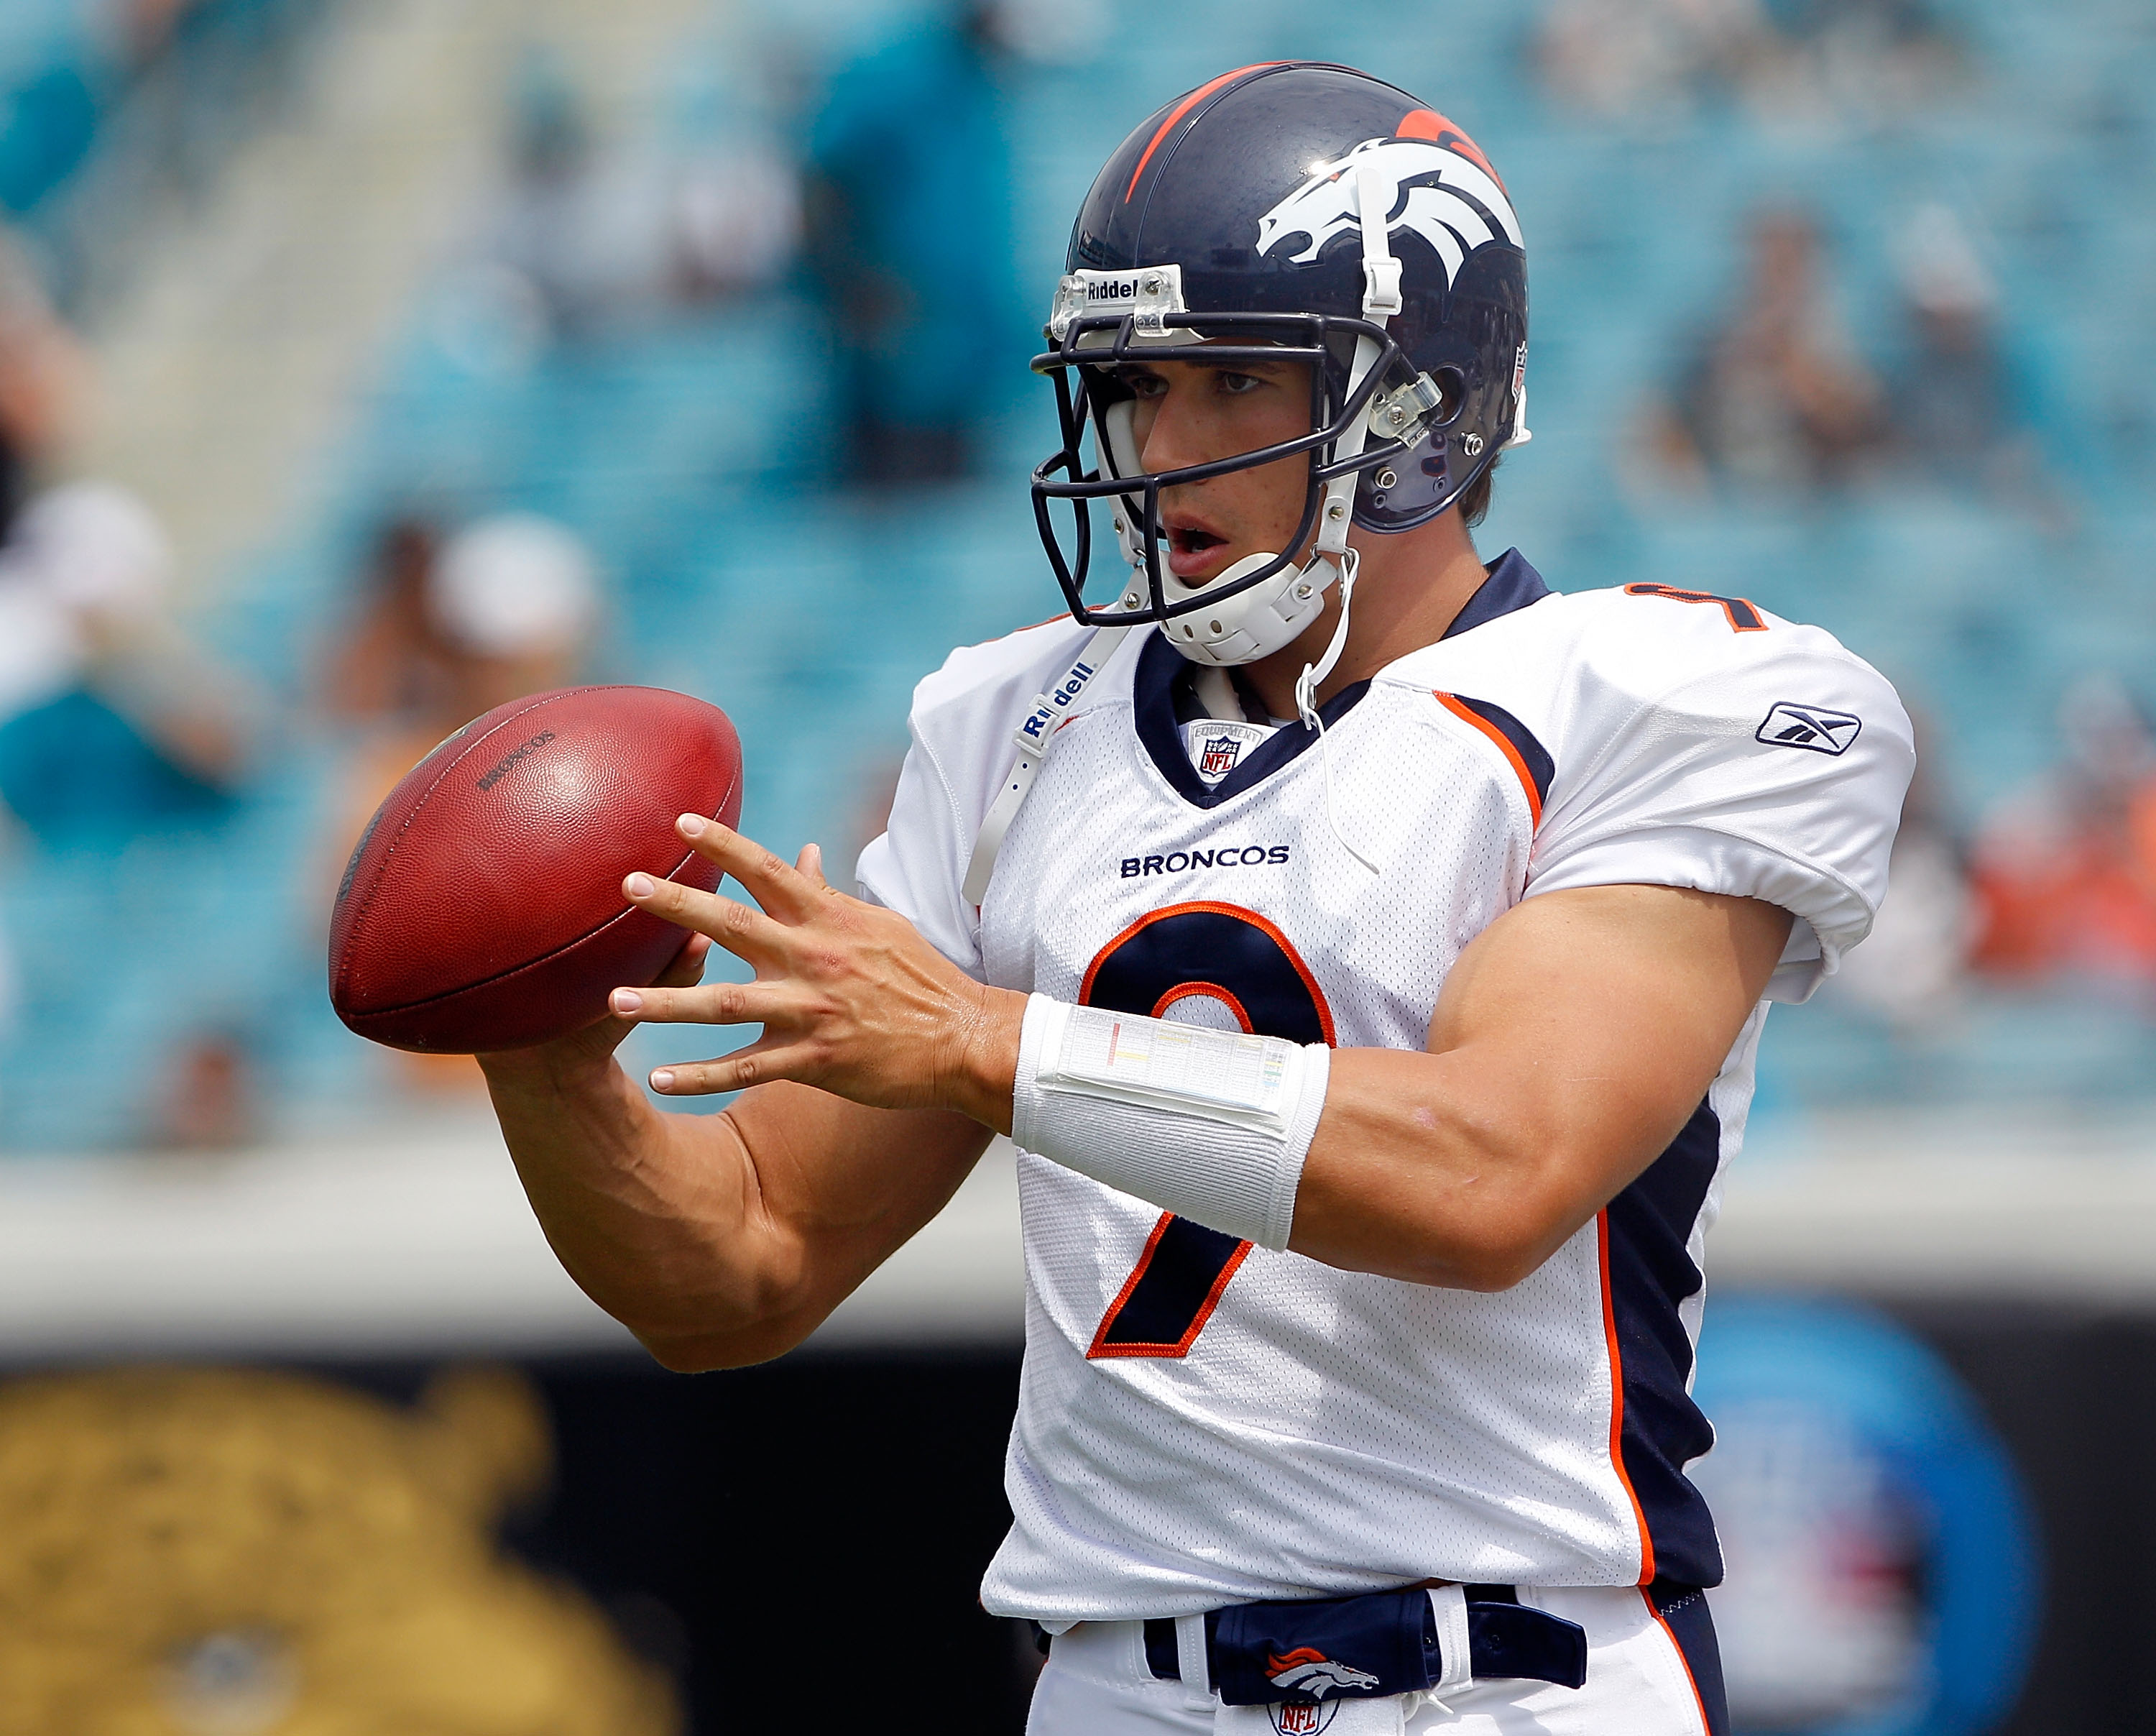 Broncos pick QB Tim Tebow at No. 25 in NFL draft – The Denver Post